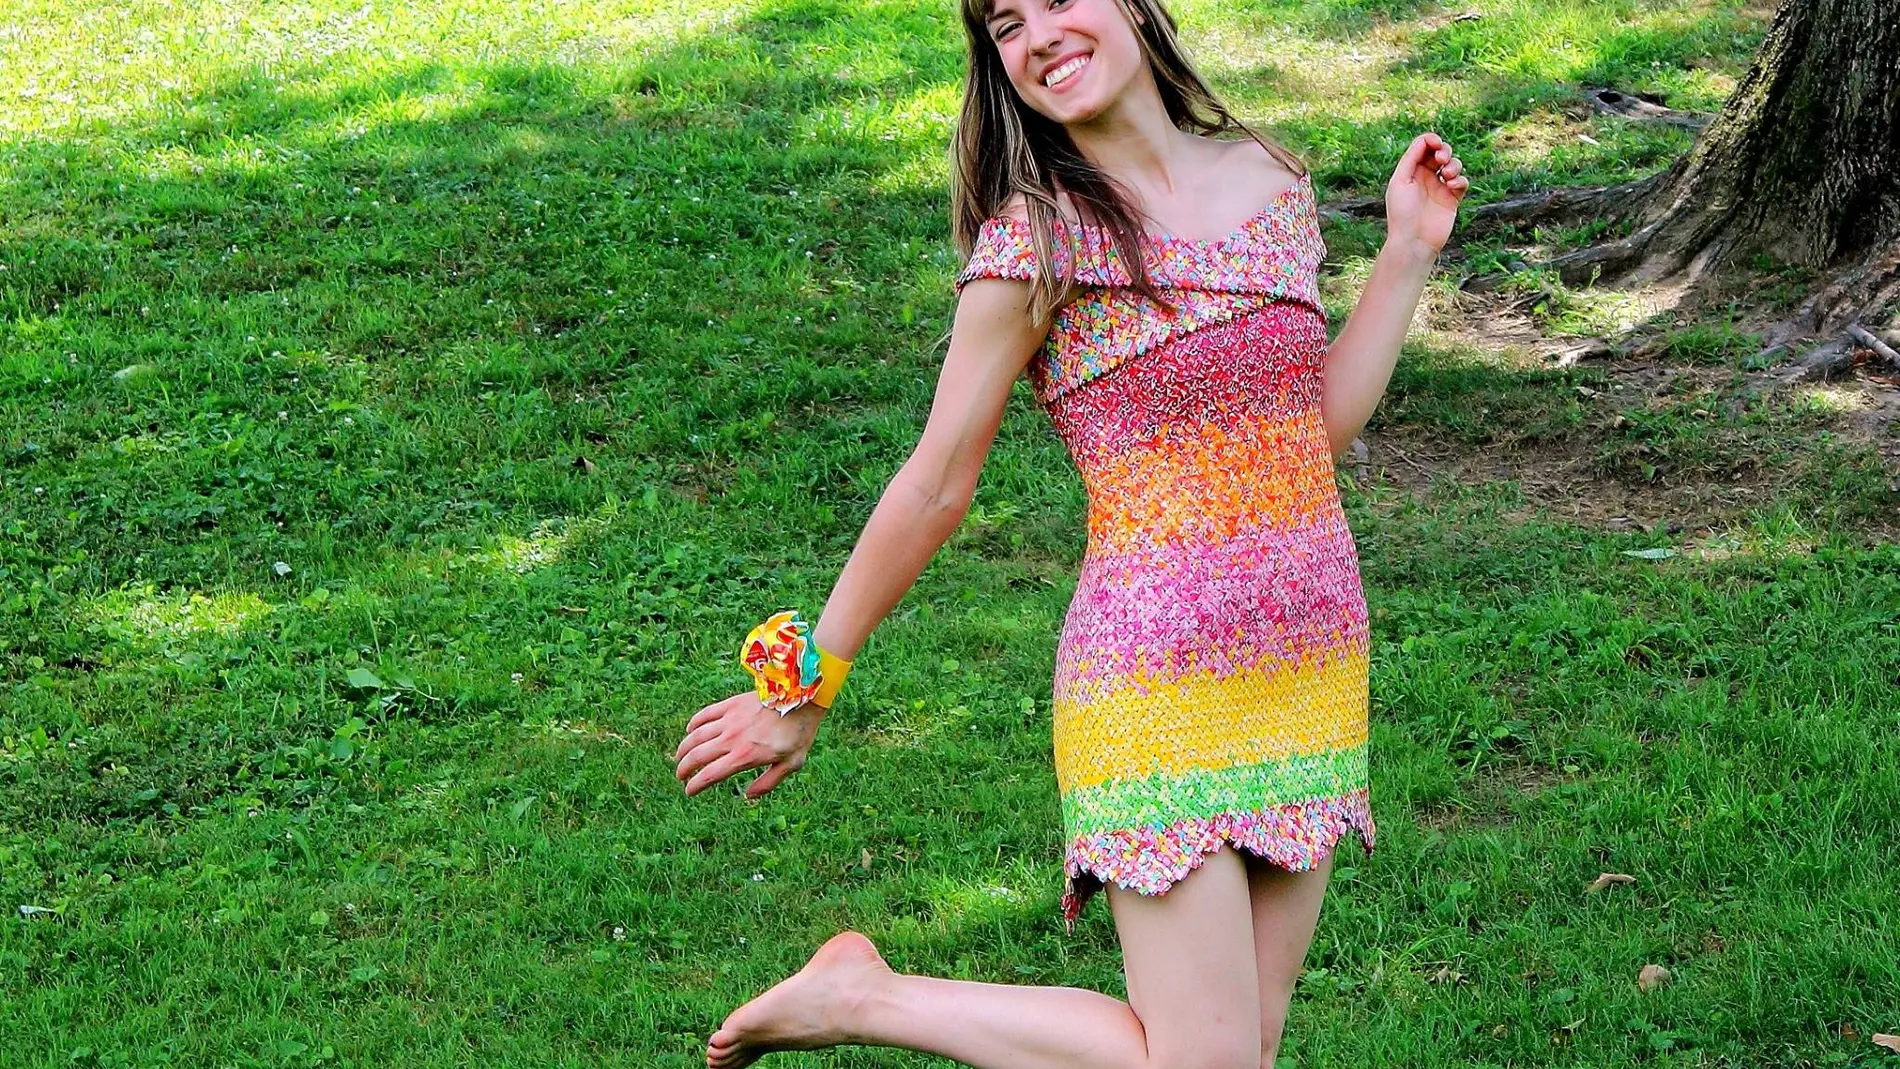 Emily Seilhamer con su vestido elaborado con envoltorios de caramelos